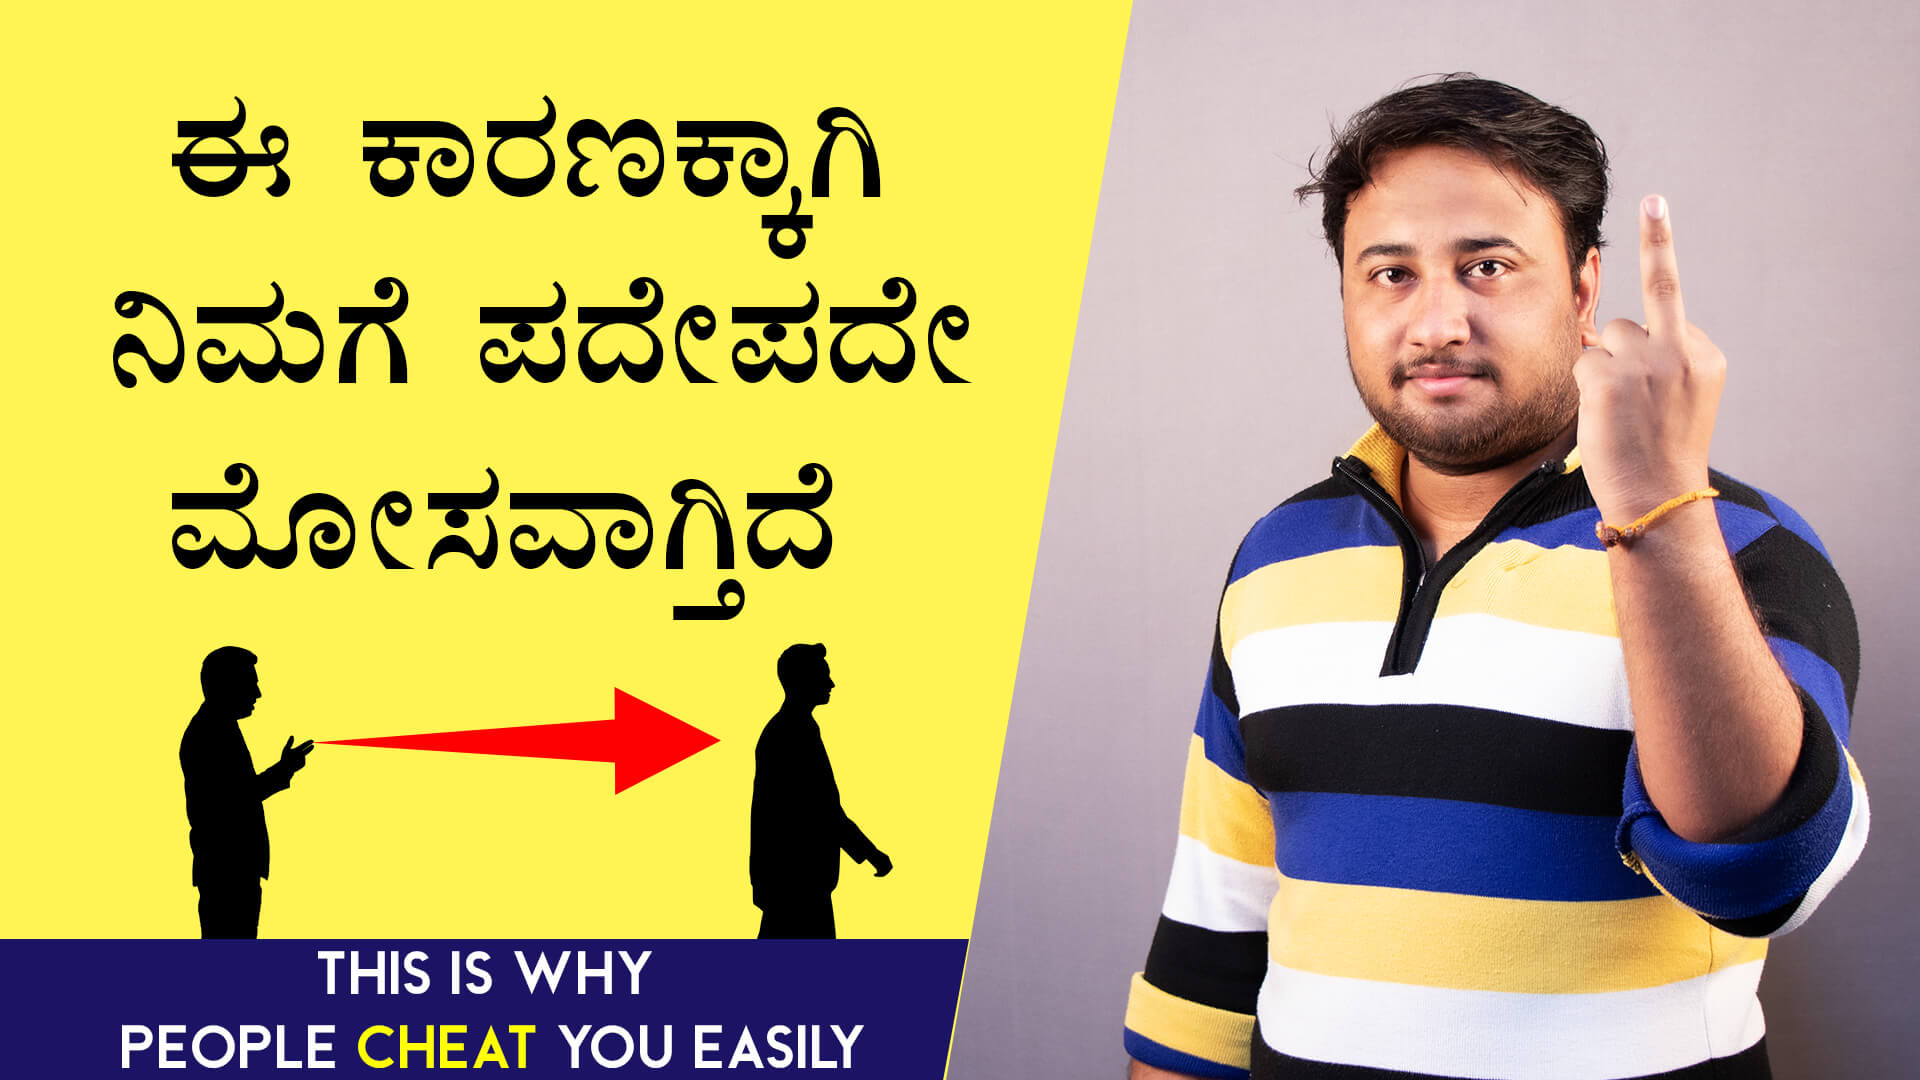 You are currently viewing ಈ ಕಾರಣಕ್ಕಾಗಿ ನಿಮಗೆ ಪದೇಪದೇ ಮೋಸವಾಗ್ತಿದೆ – This is Why People Cheat You Easily in Kannada